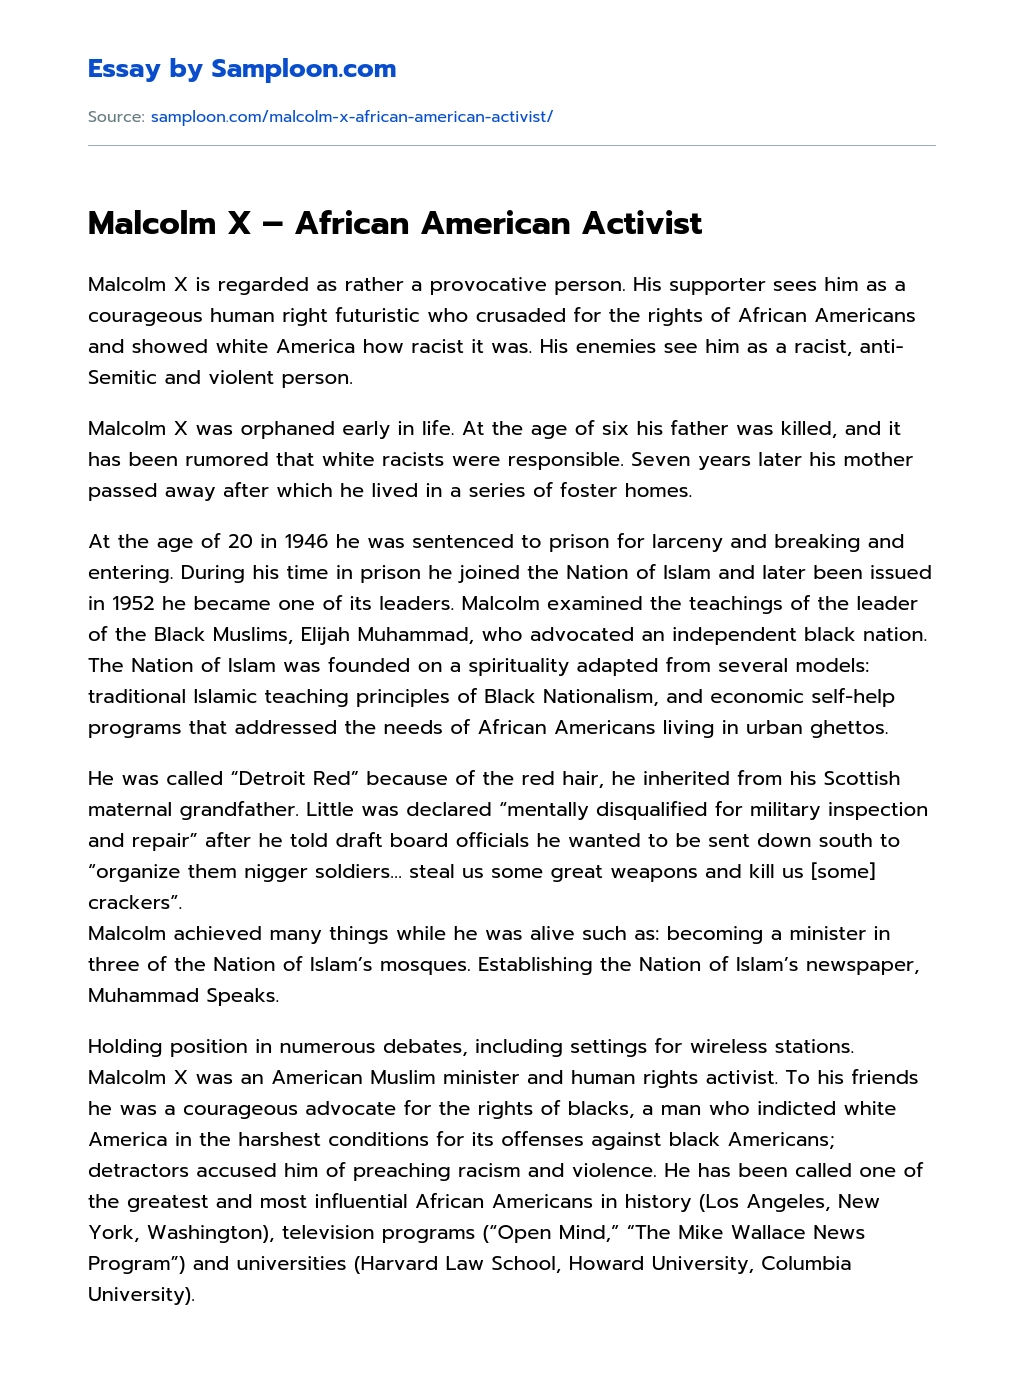 Malcolm X – African American Activist essay